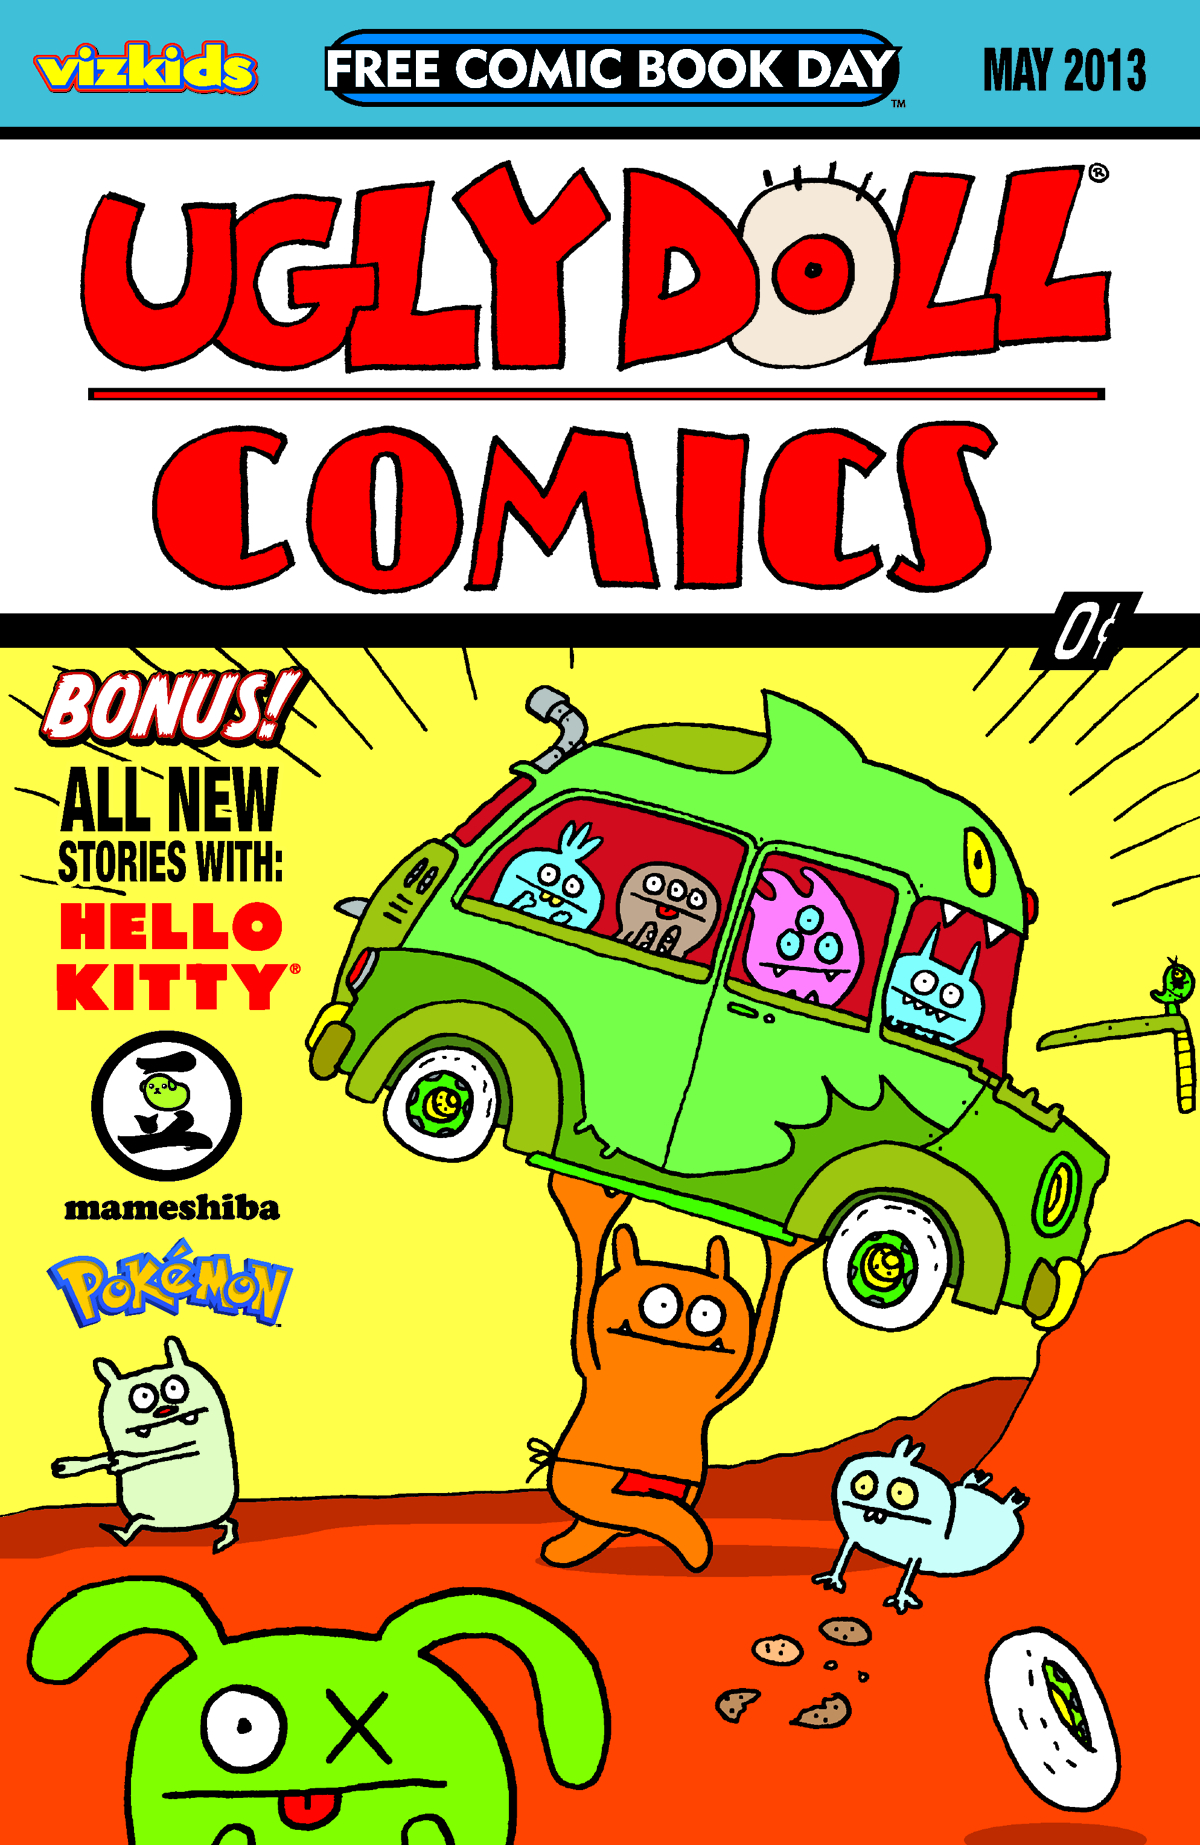 JAN130012 - FCBD 2013 ITS AN UGLY DOLL COMIC & OTHER STUFF - Free Comic  Book Day